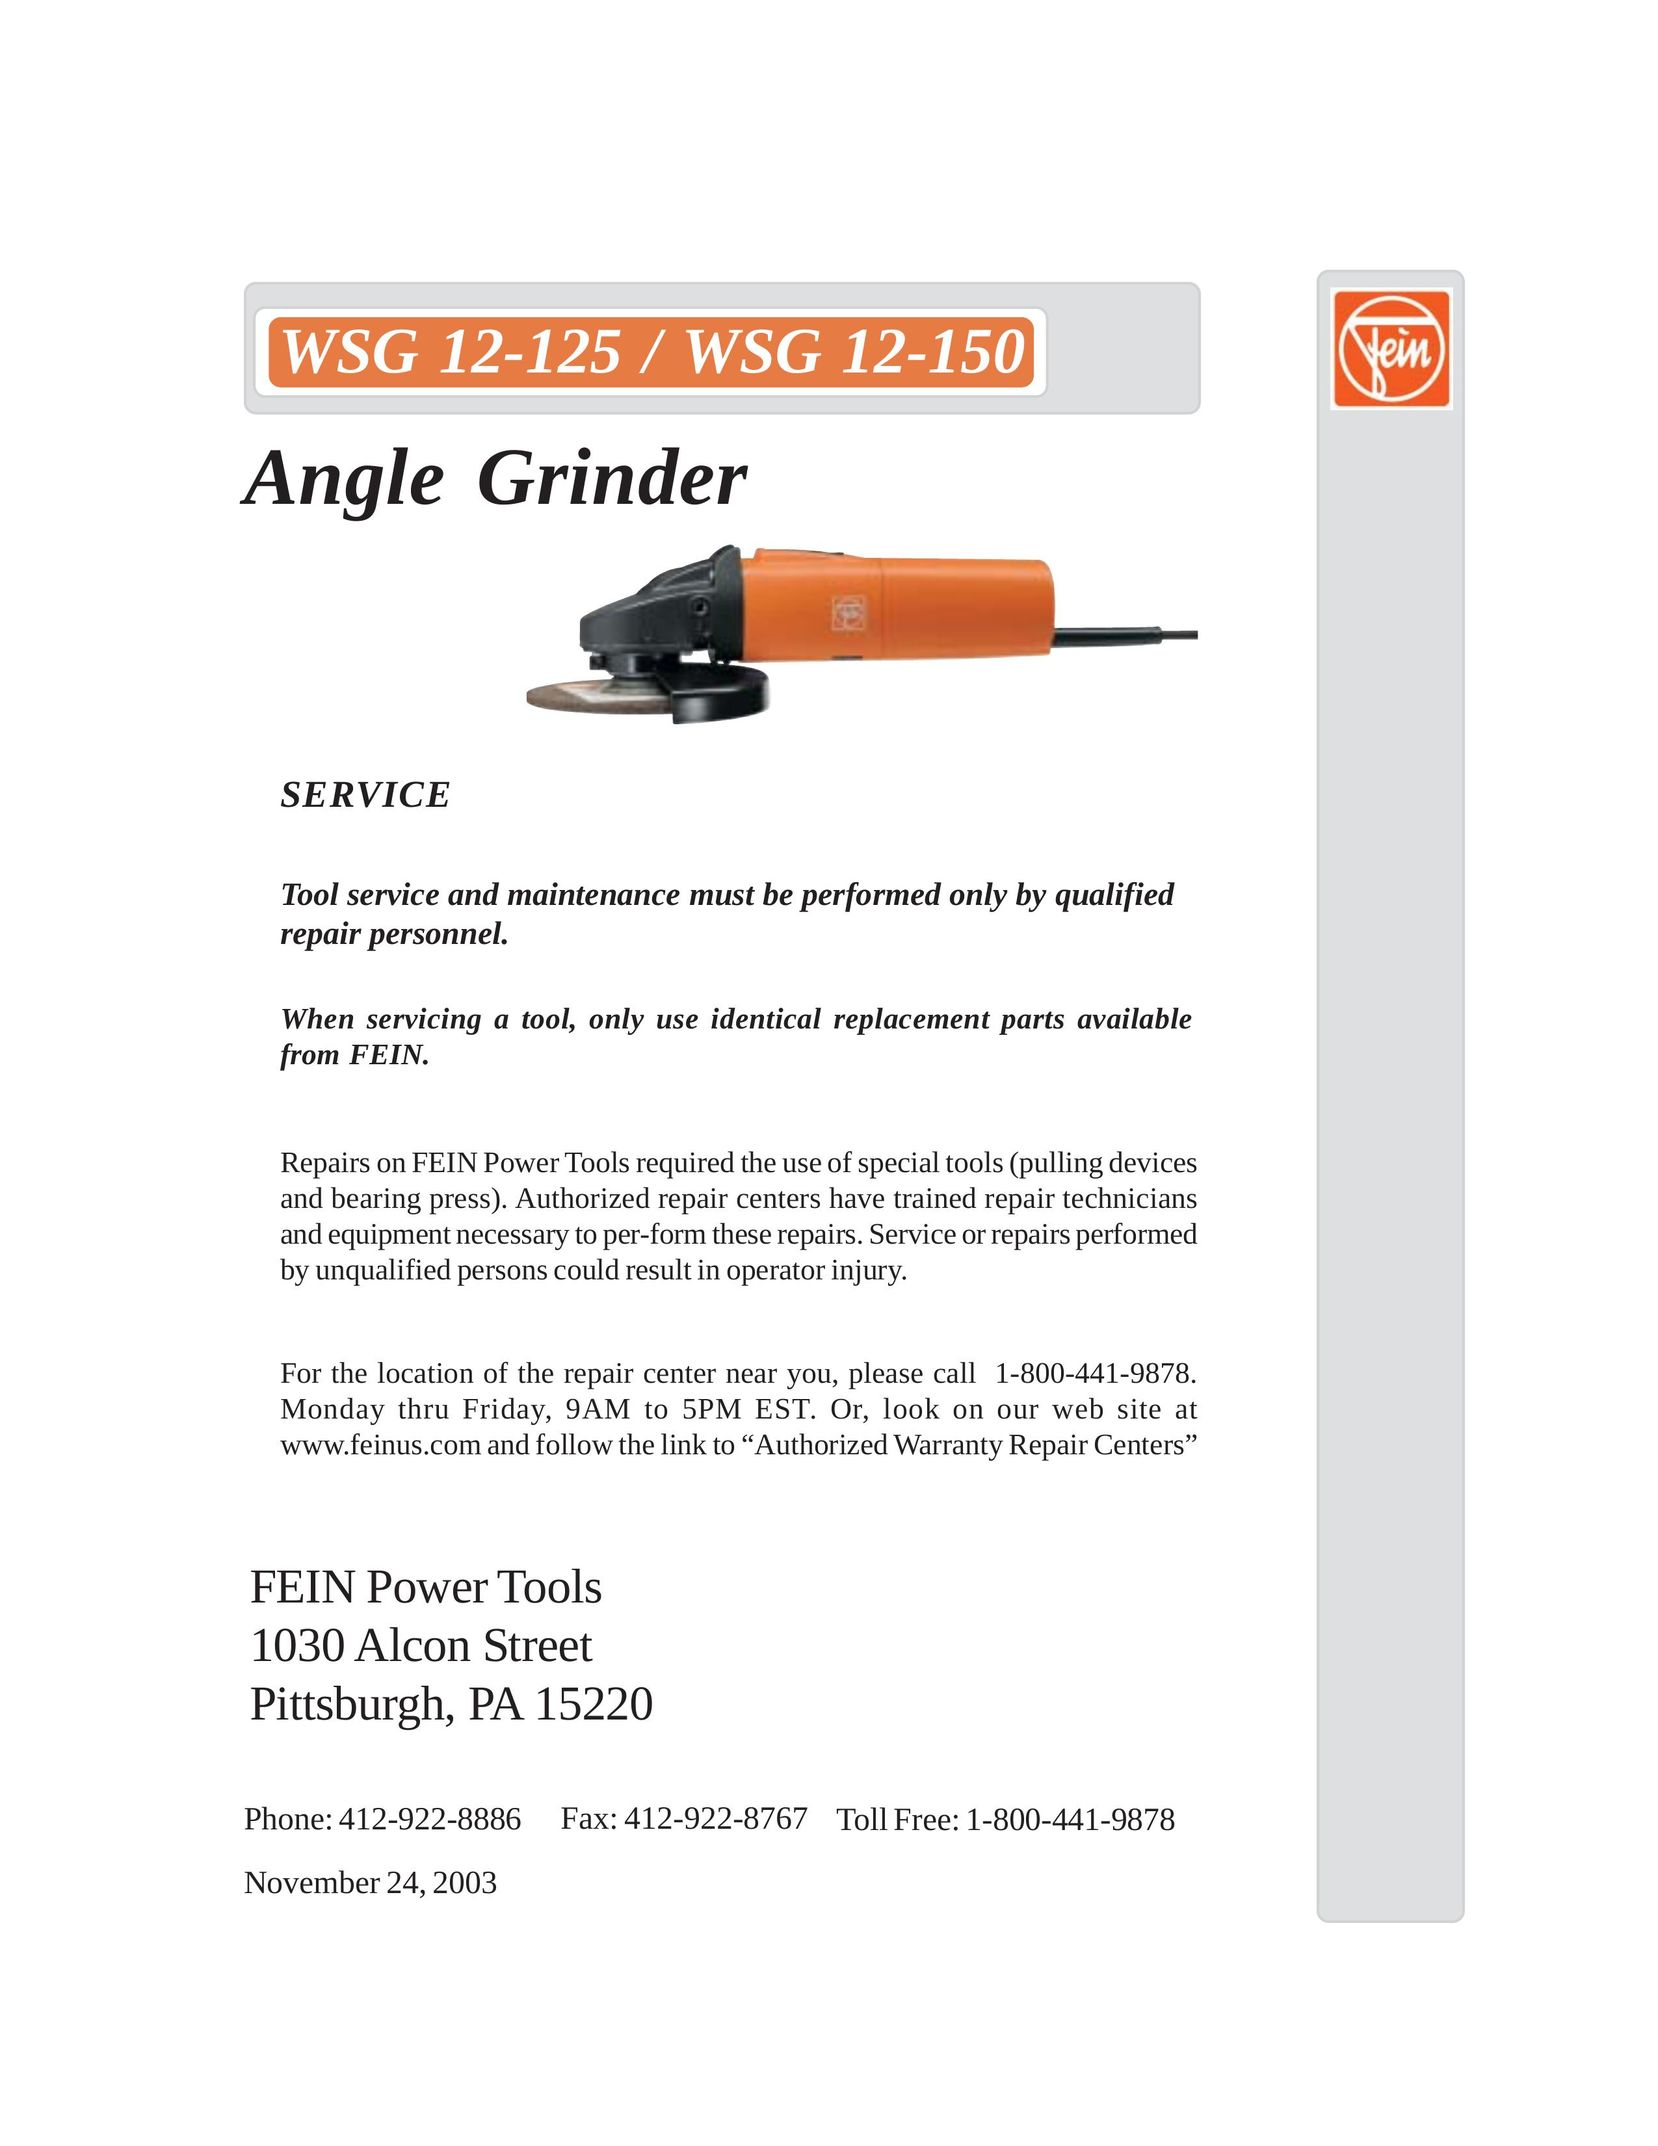 FEIN Power Tools WSG 12-125 Grinder User Manual